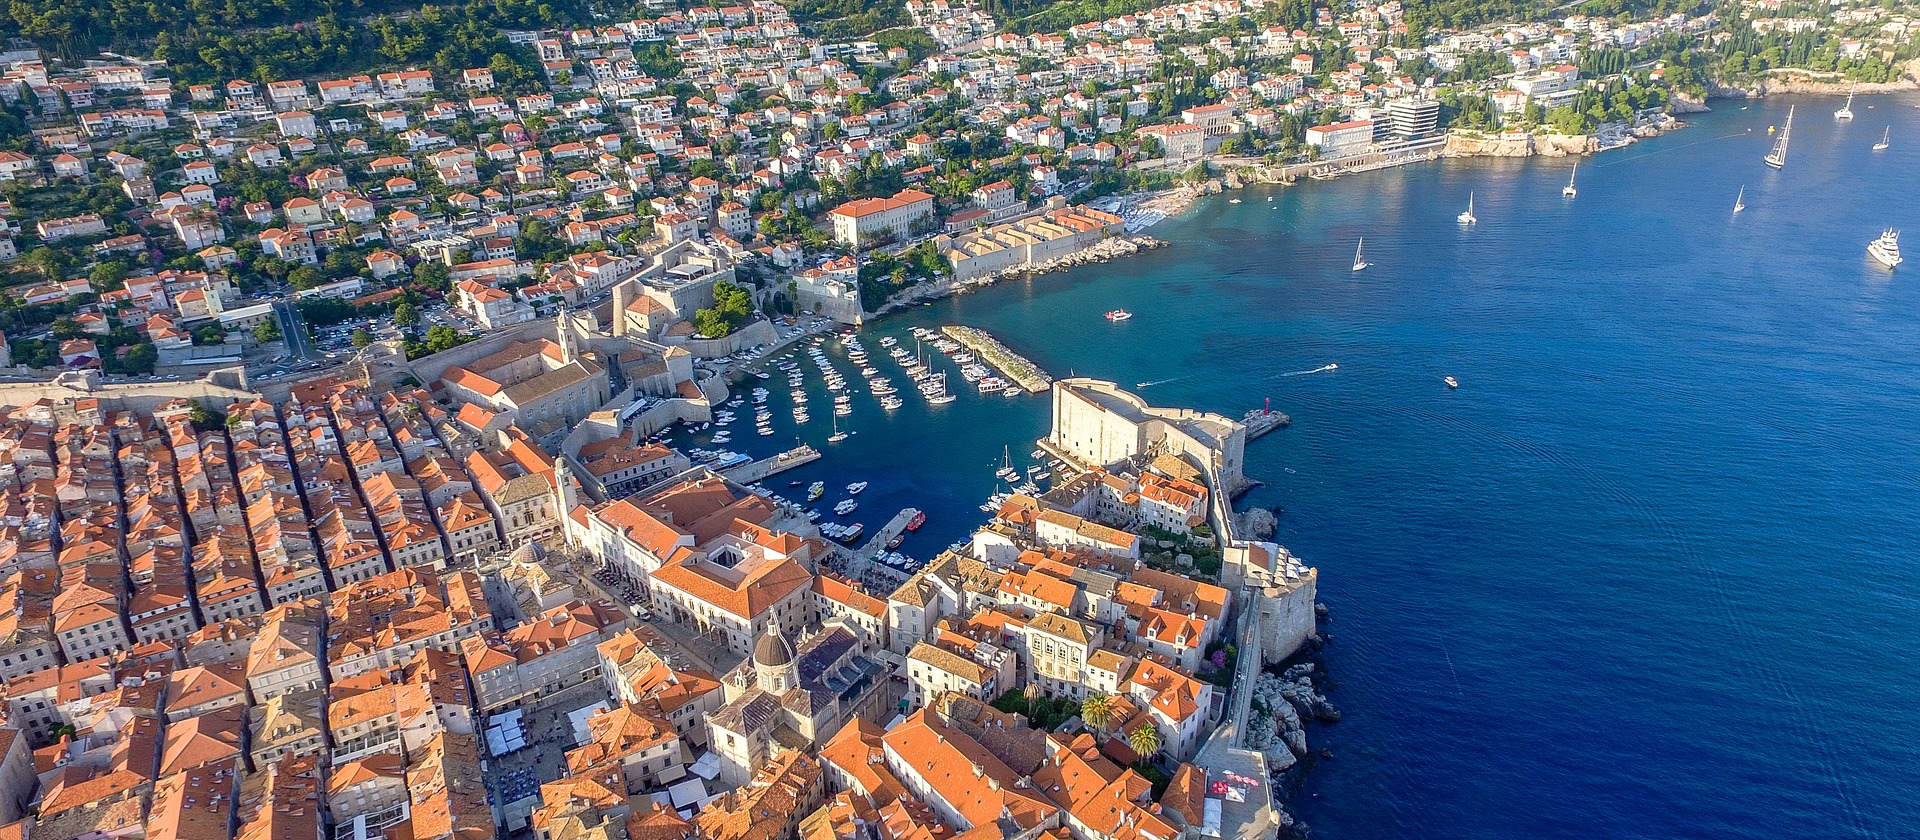 Aerial view of Dubrovnik on the Mediterranean Sea.